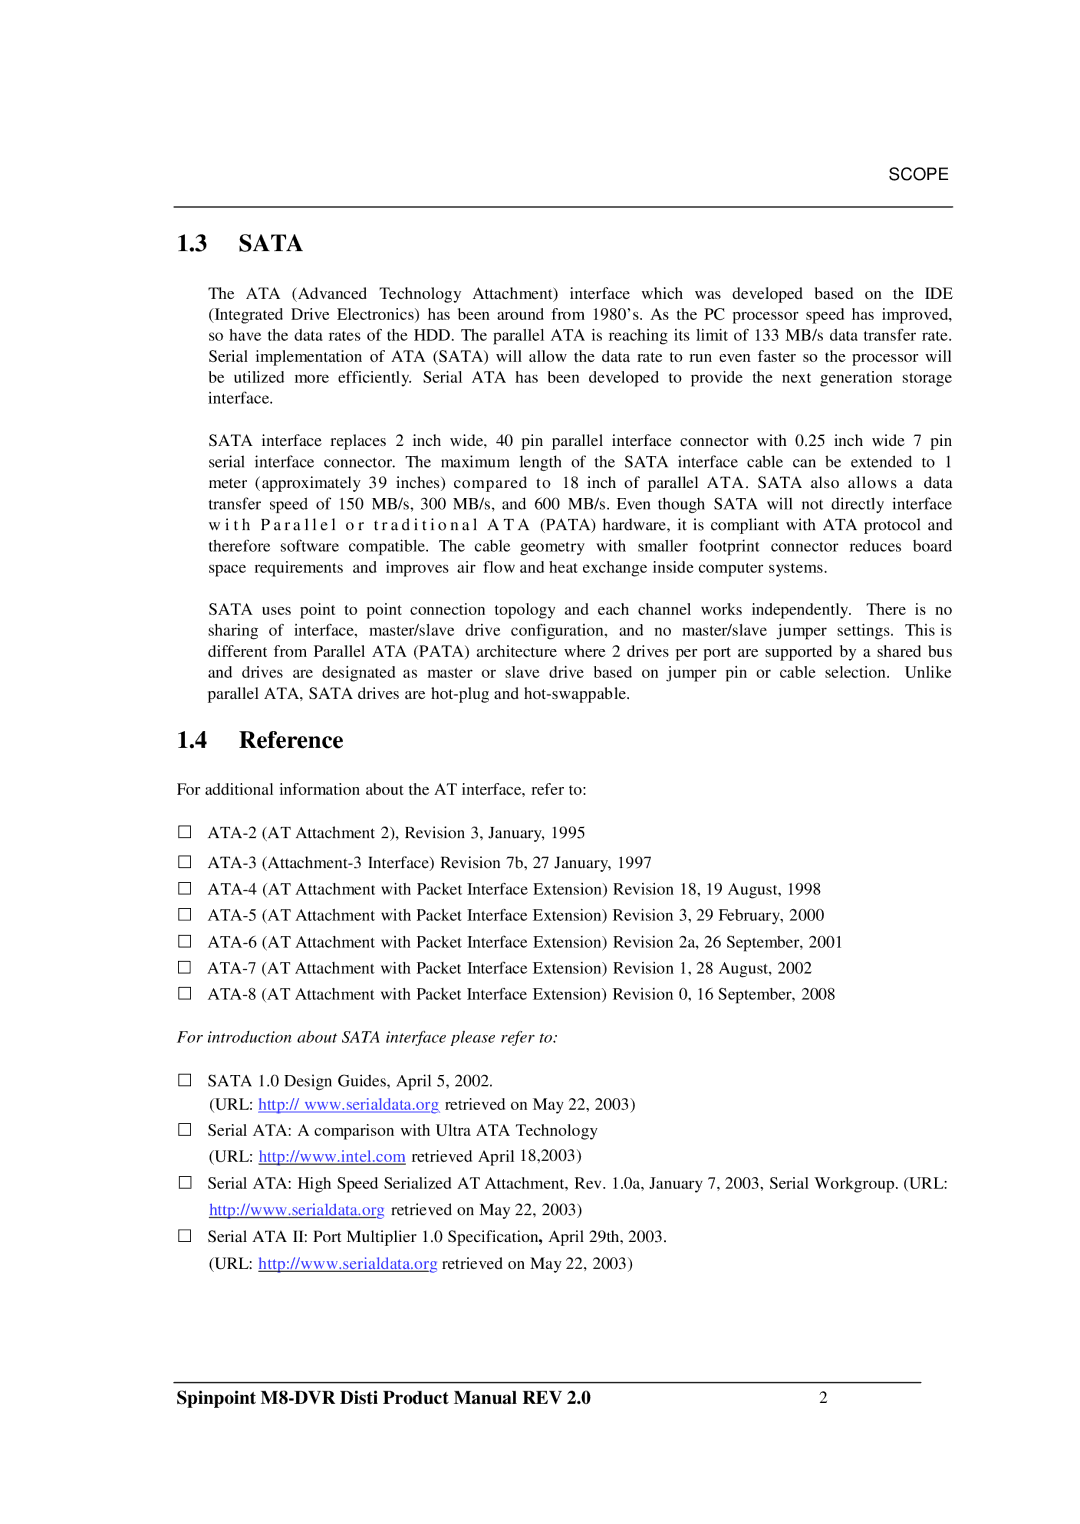 Samsung M8-DVR manual Sata, Reference 